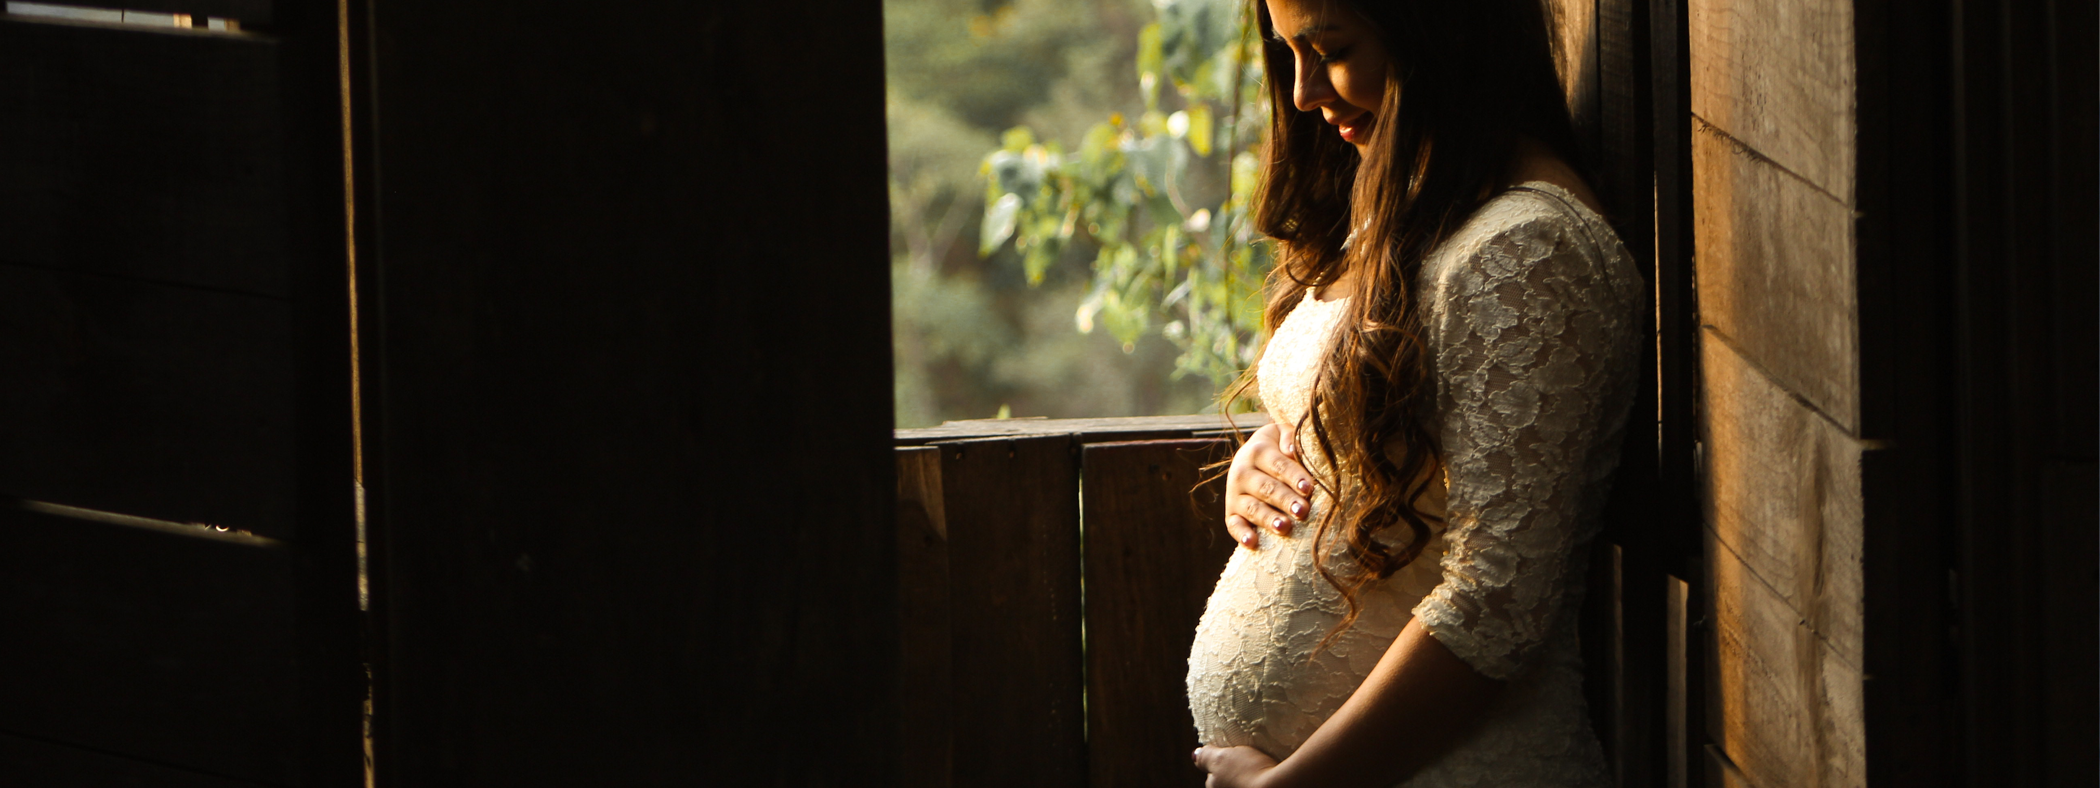 A pregnant woman standing near a window.